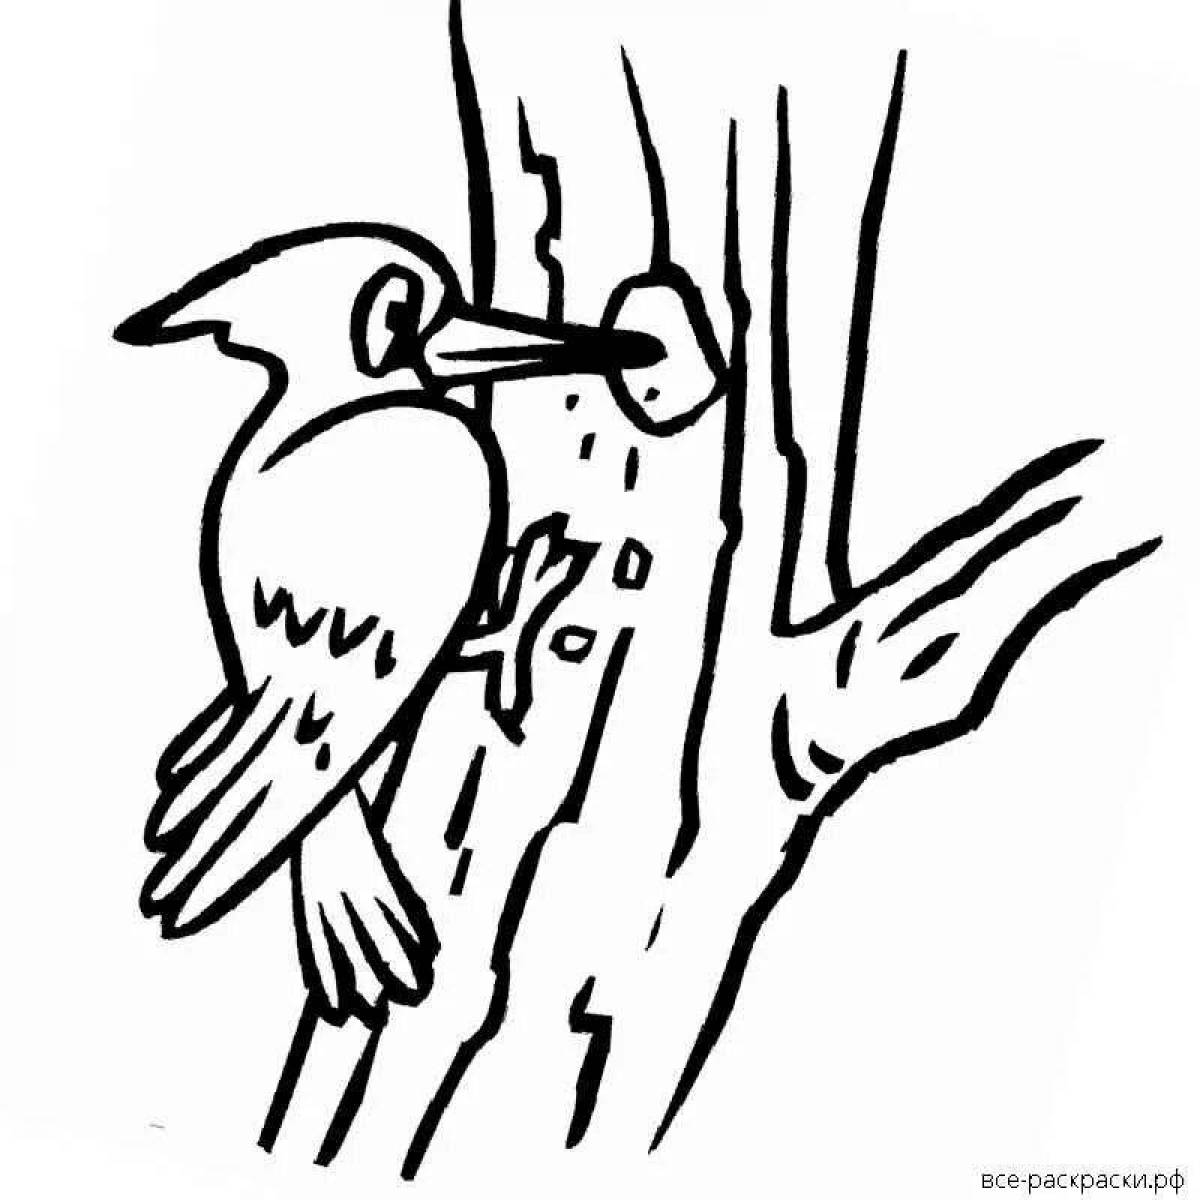 Charming woodpecker on a tree